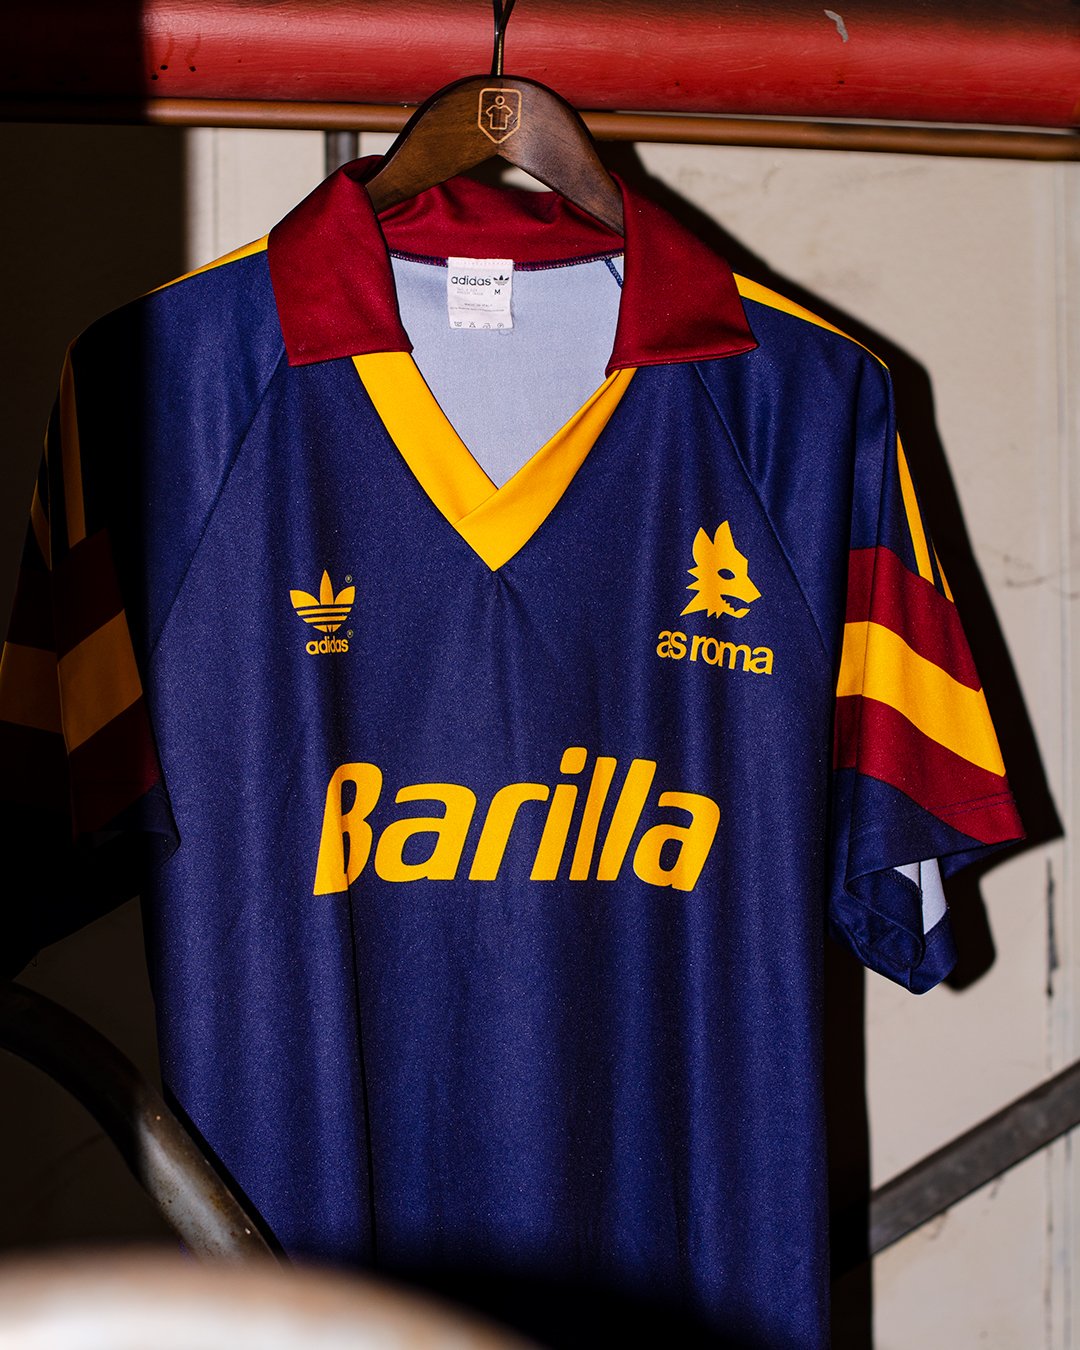 Classic Football Shirts on Twitter: "Roma 1991 Third Adidas The Trefoil. The Classic Crest. Barilla Sponsor. 😍 https://t.co/7Ke9obWFc7" / Twitter